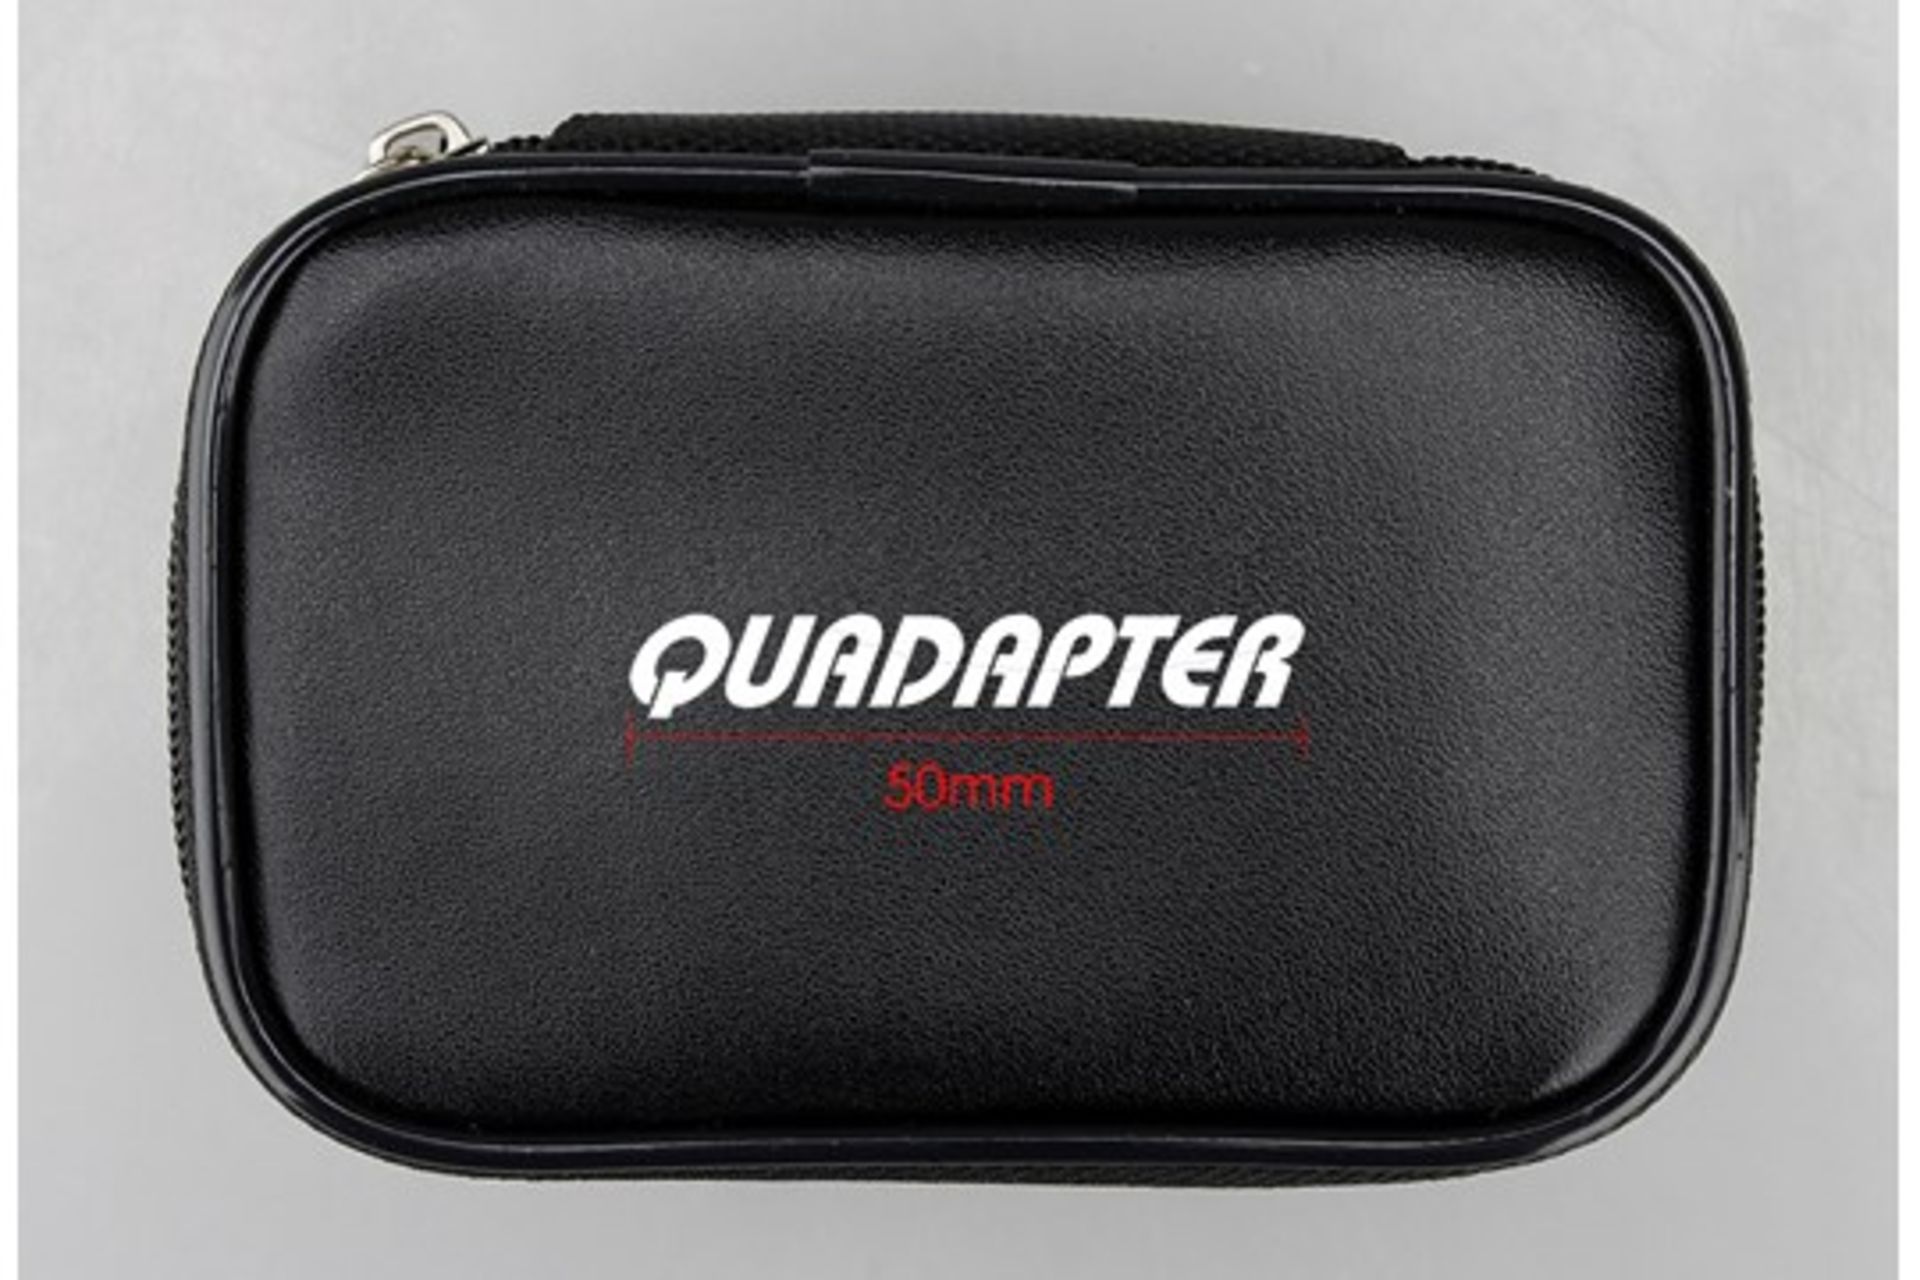 50x Quadapter - The Worldwide Universal Travel Adapter! 4 USB Ports - Image 6 of 12